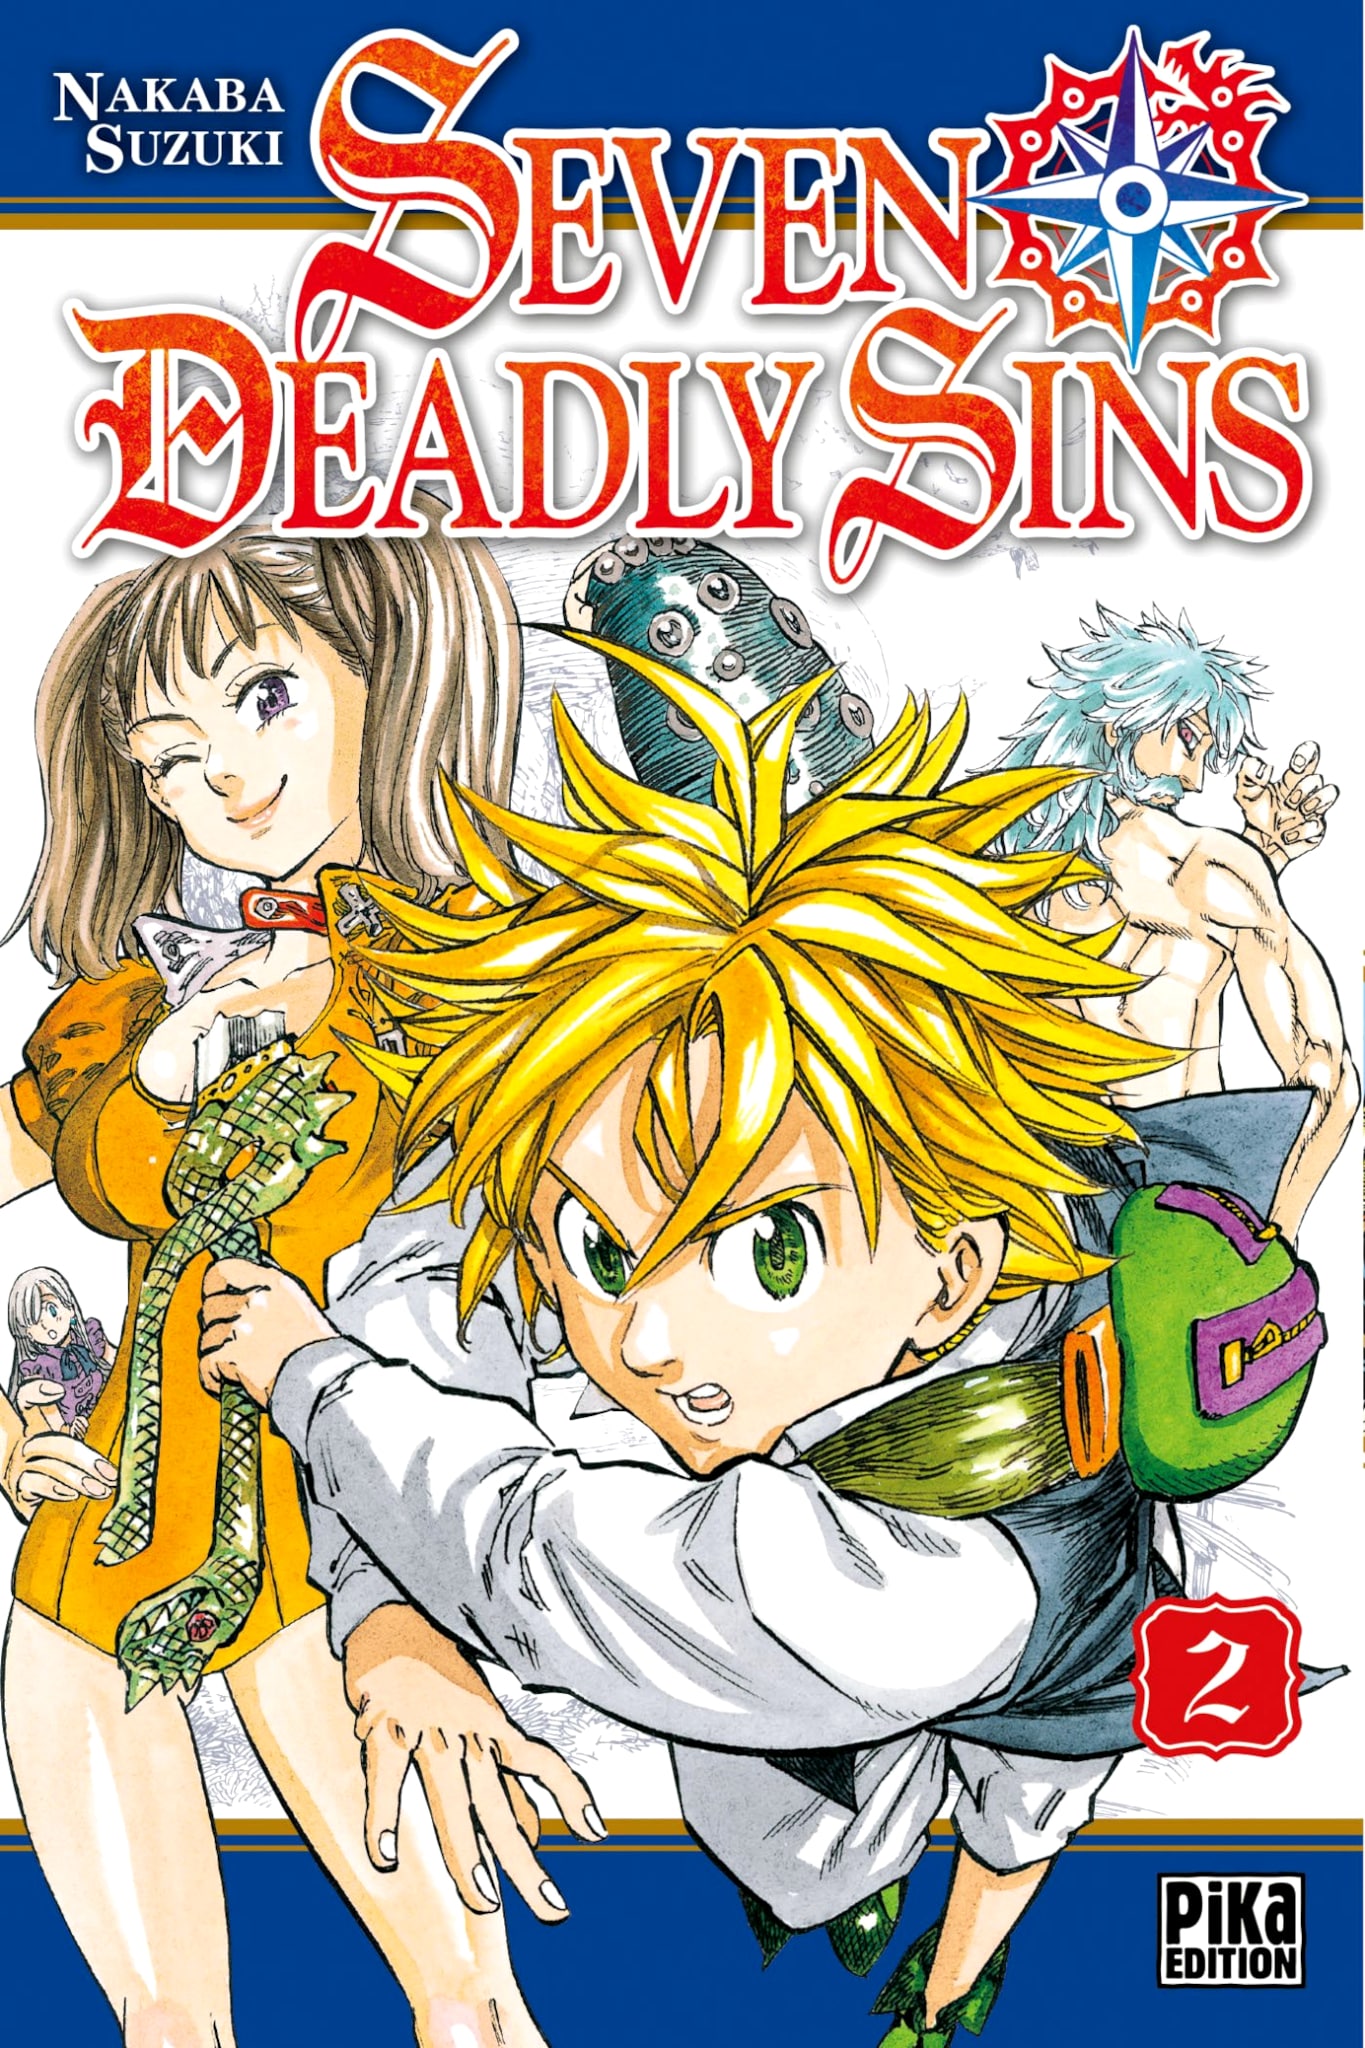 Tome 2 du manga The Seven Deadly Sins